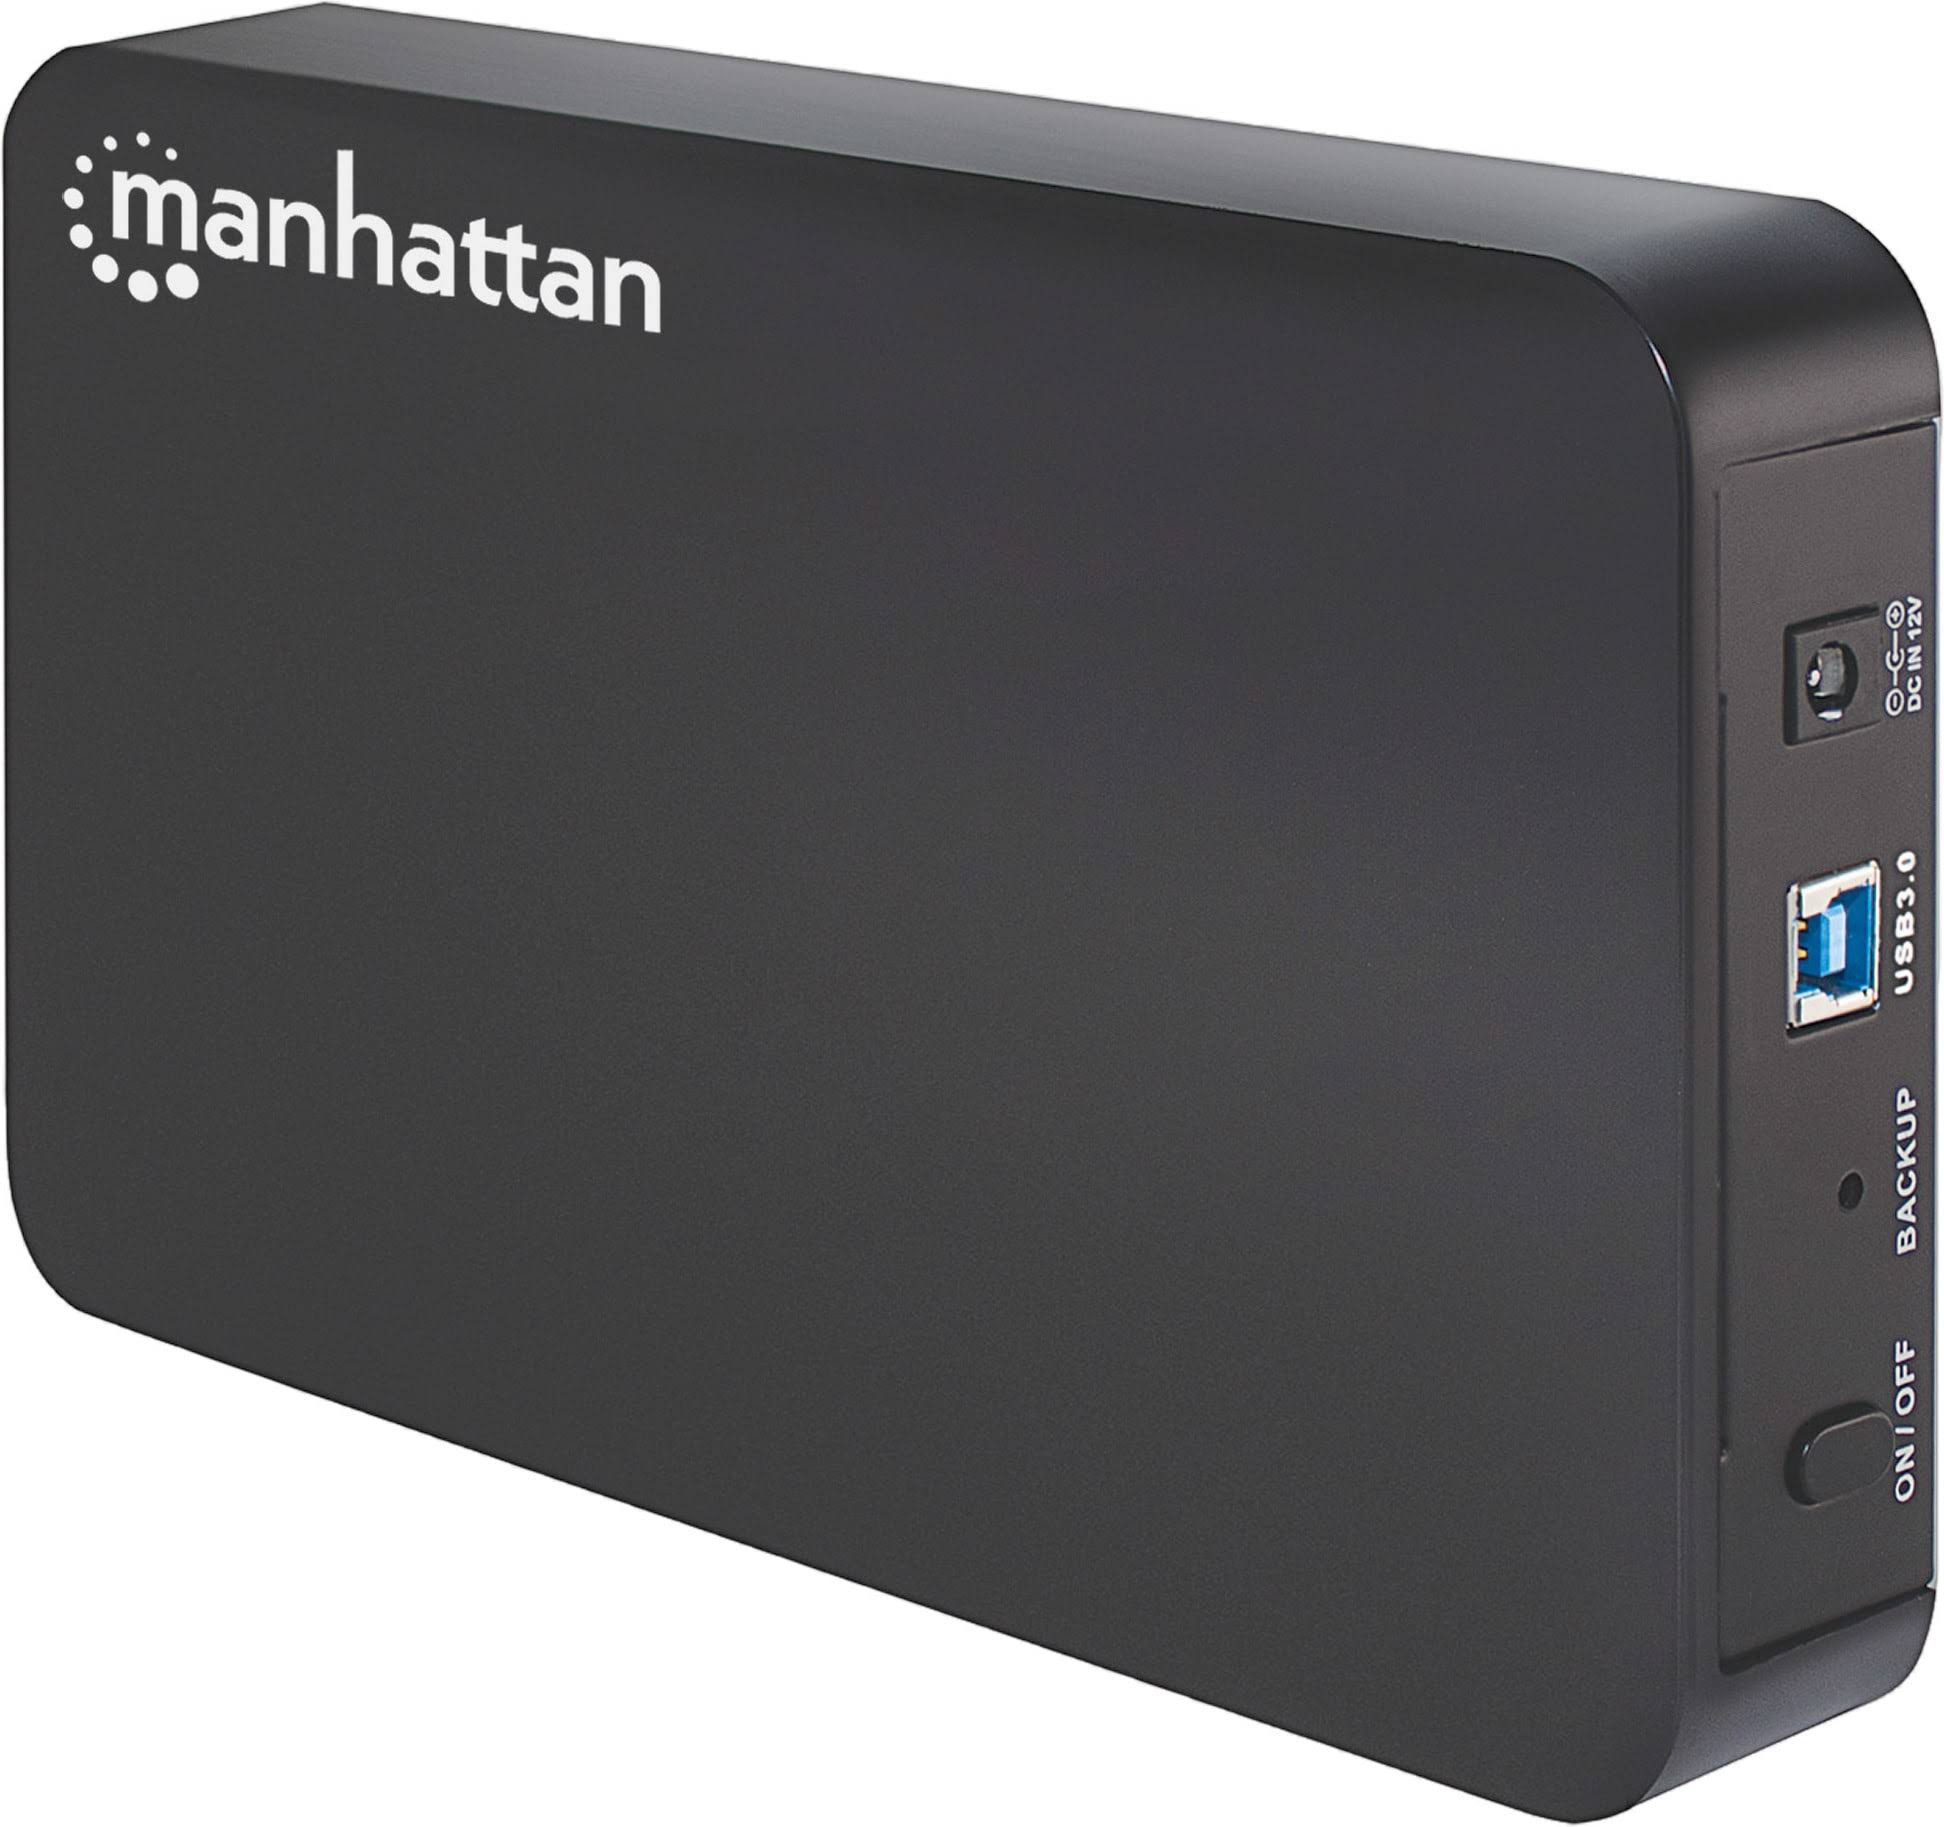 Manhattan SuperSpeed USB SATA Drive Enclosure - Black